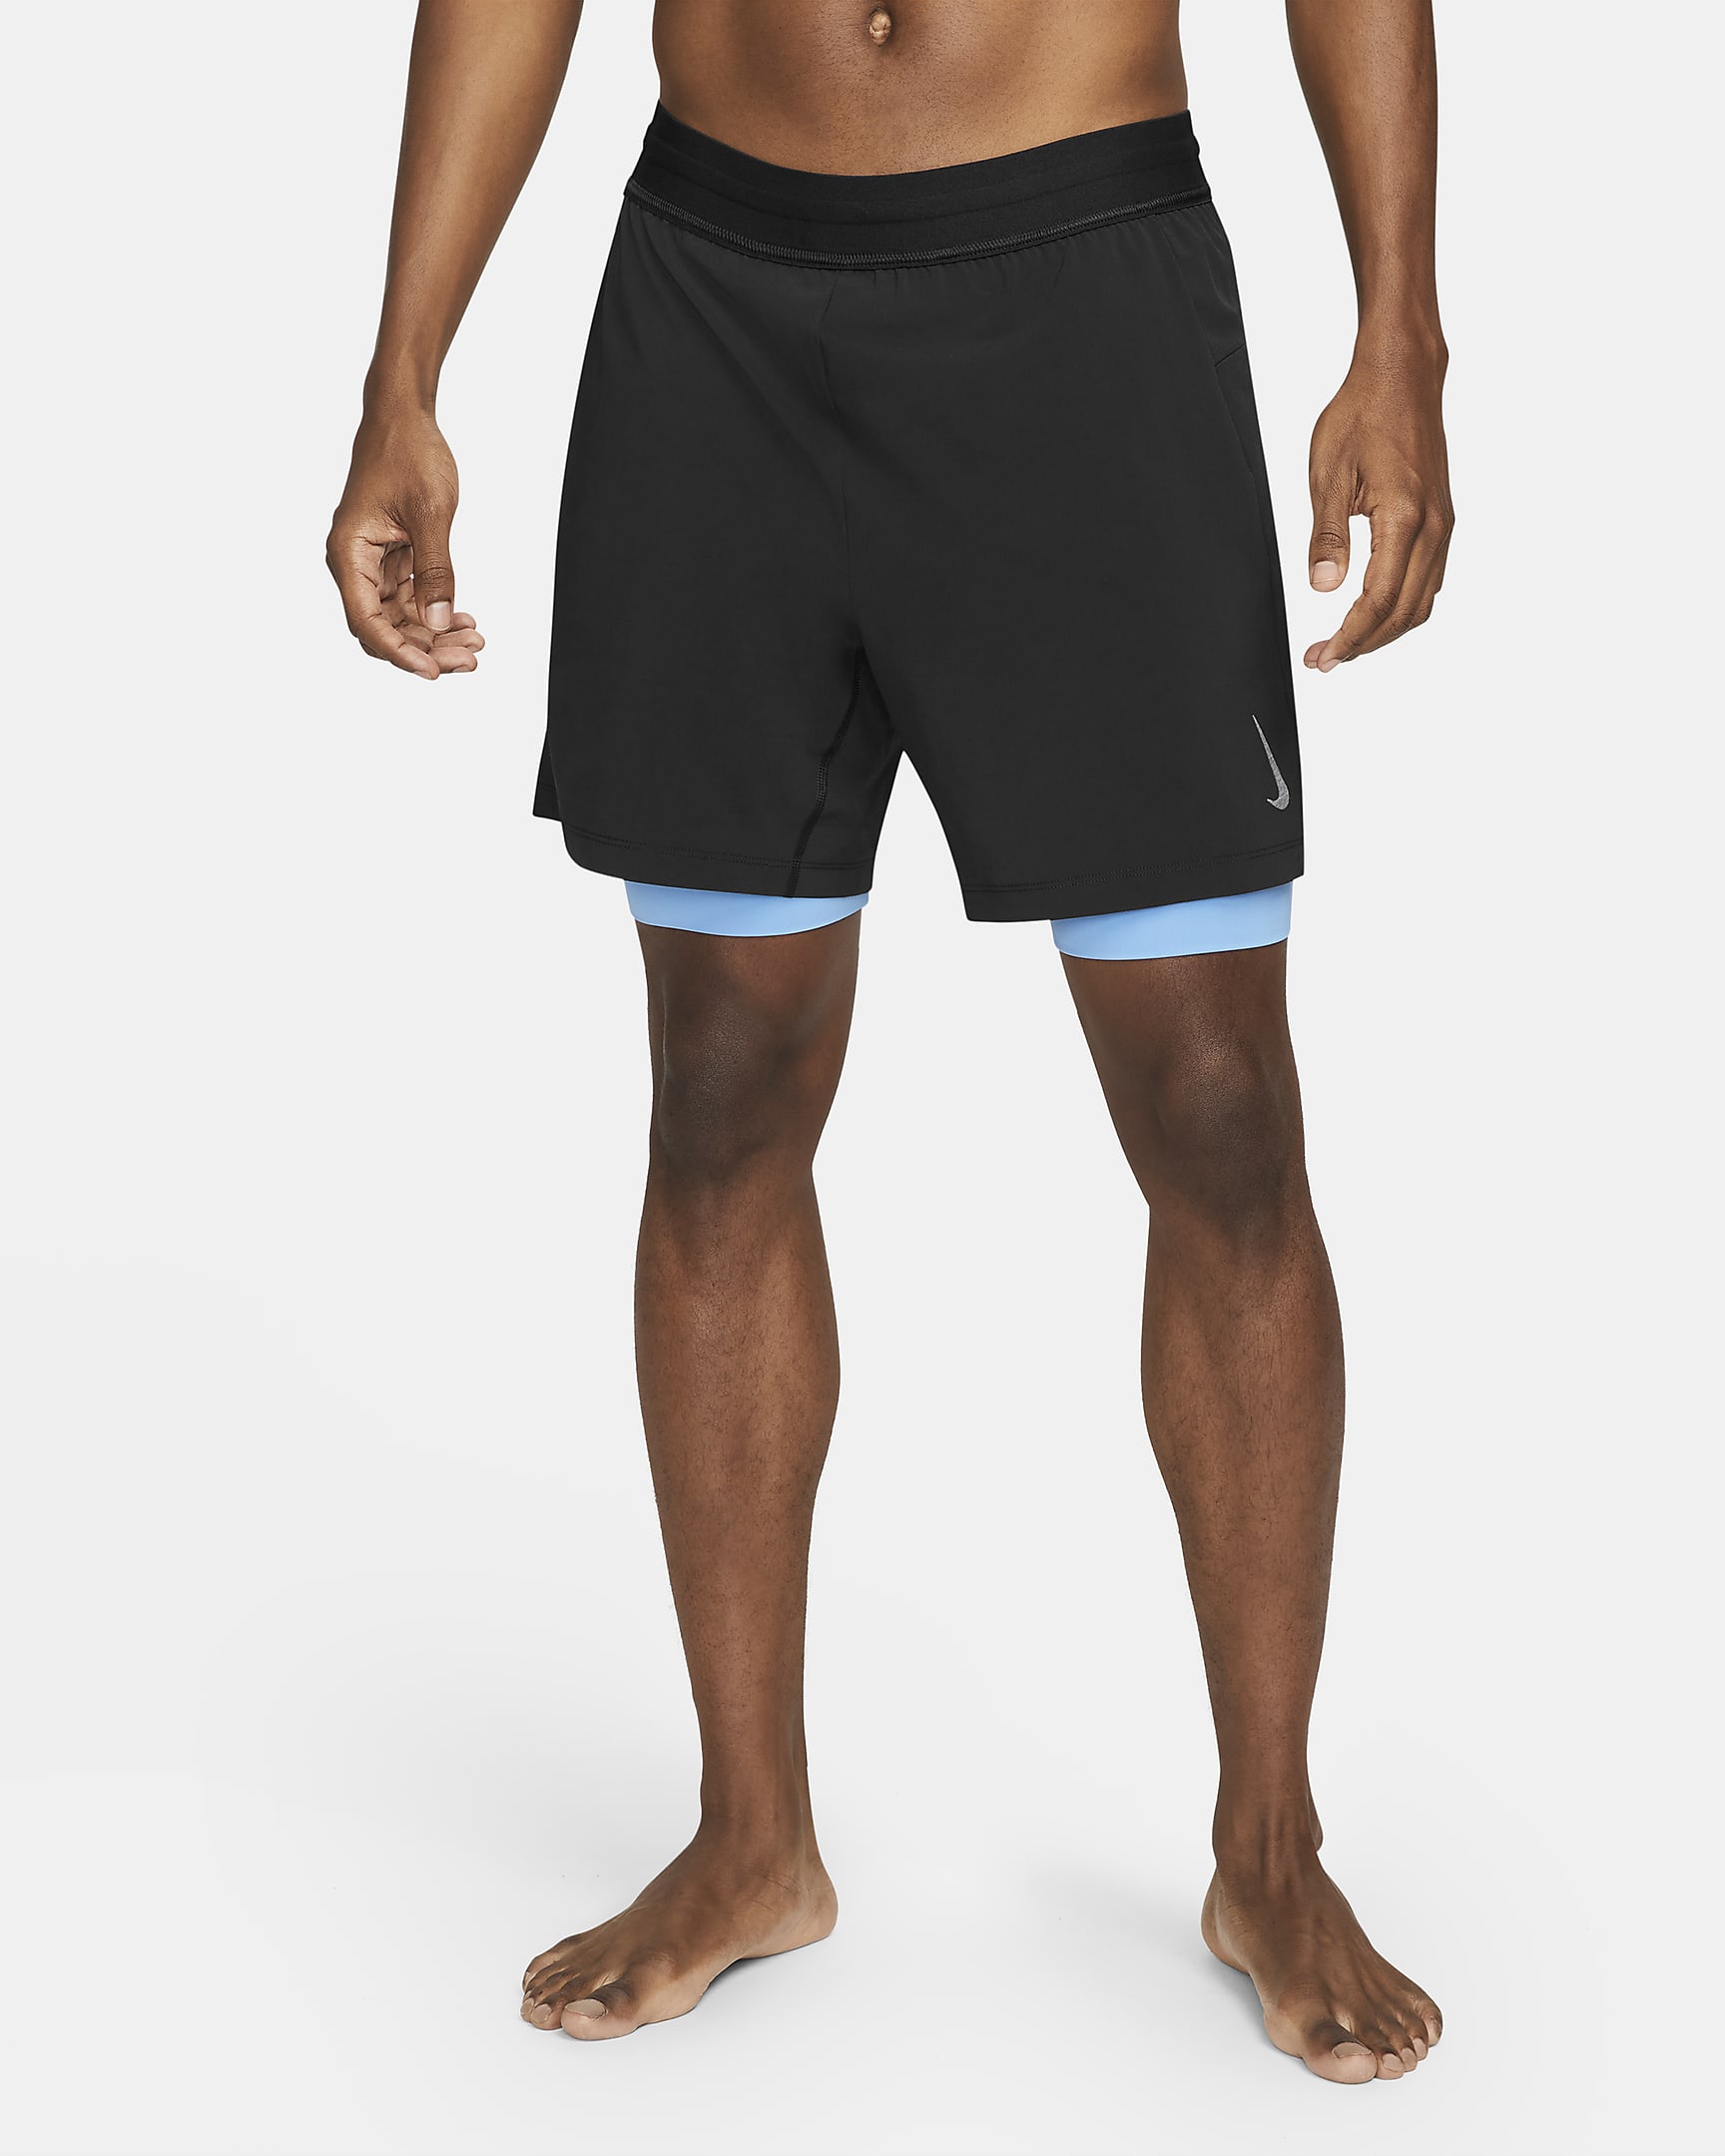 Nike Yoga Men\'s 2-in-1 Shorts Black/Coast